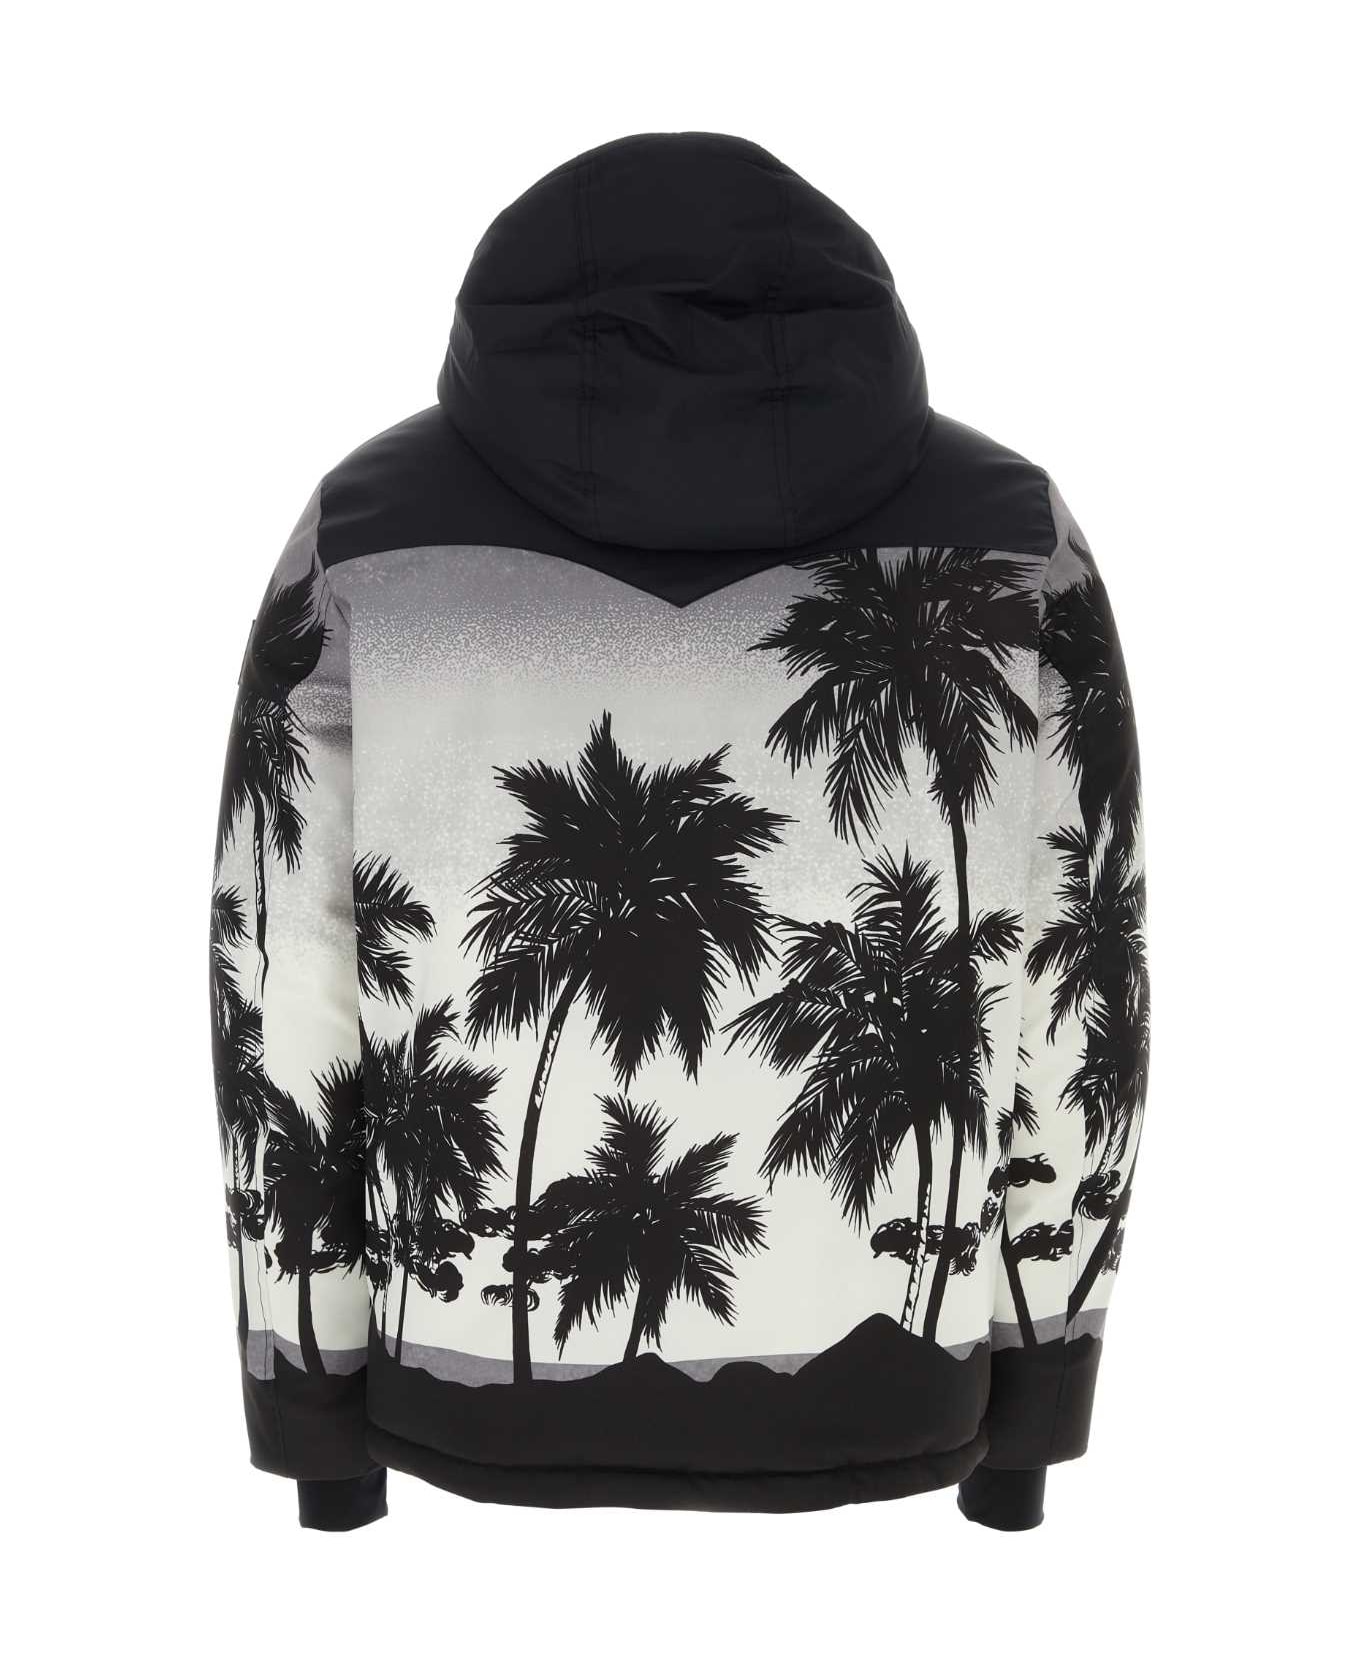 Palm Angels Printed Polyester Palm Ski Jacket - LIGHTGREYBLACK